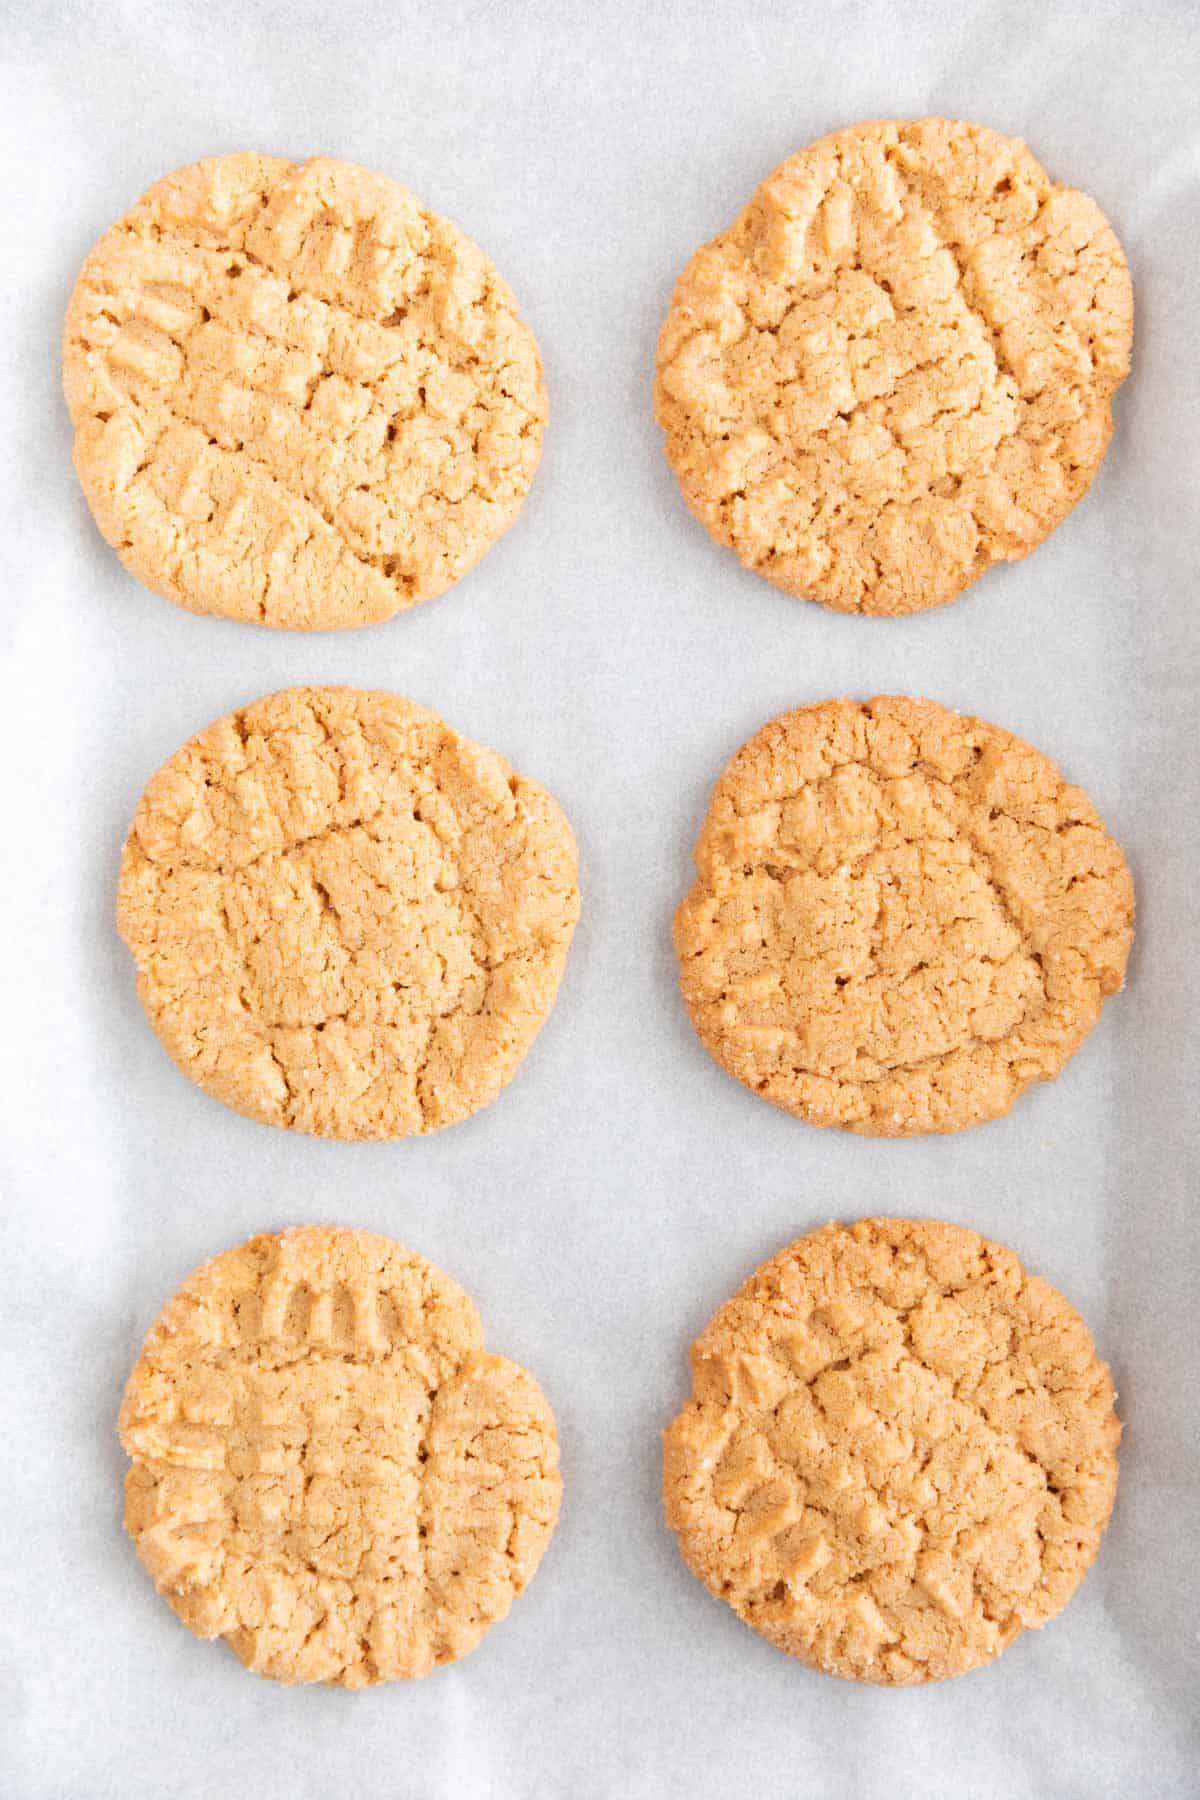 Baked vegan peanut butter cookies onto a lined baking sheet.